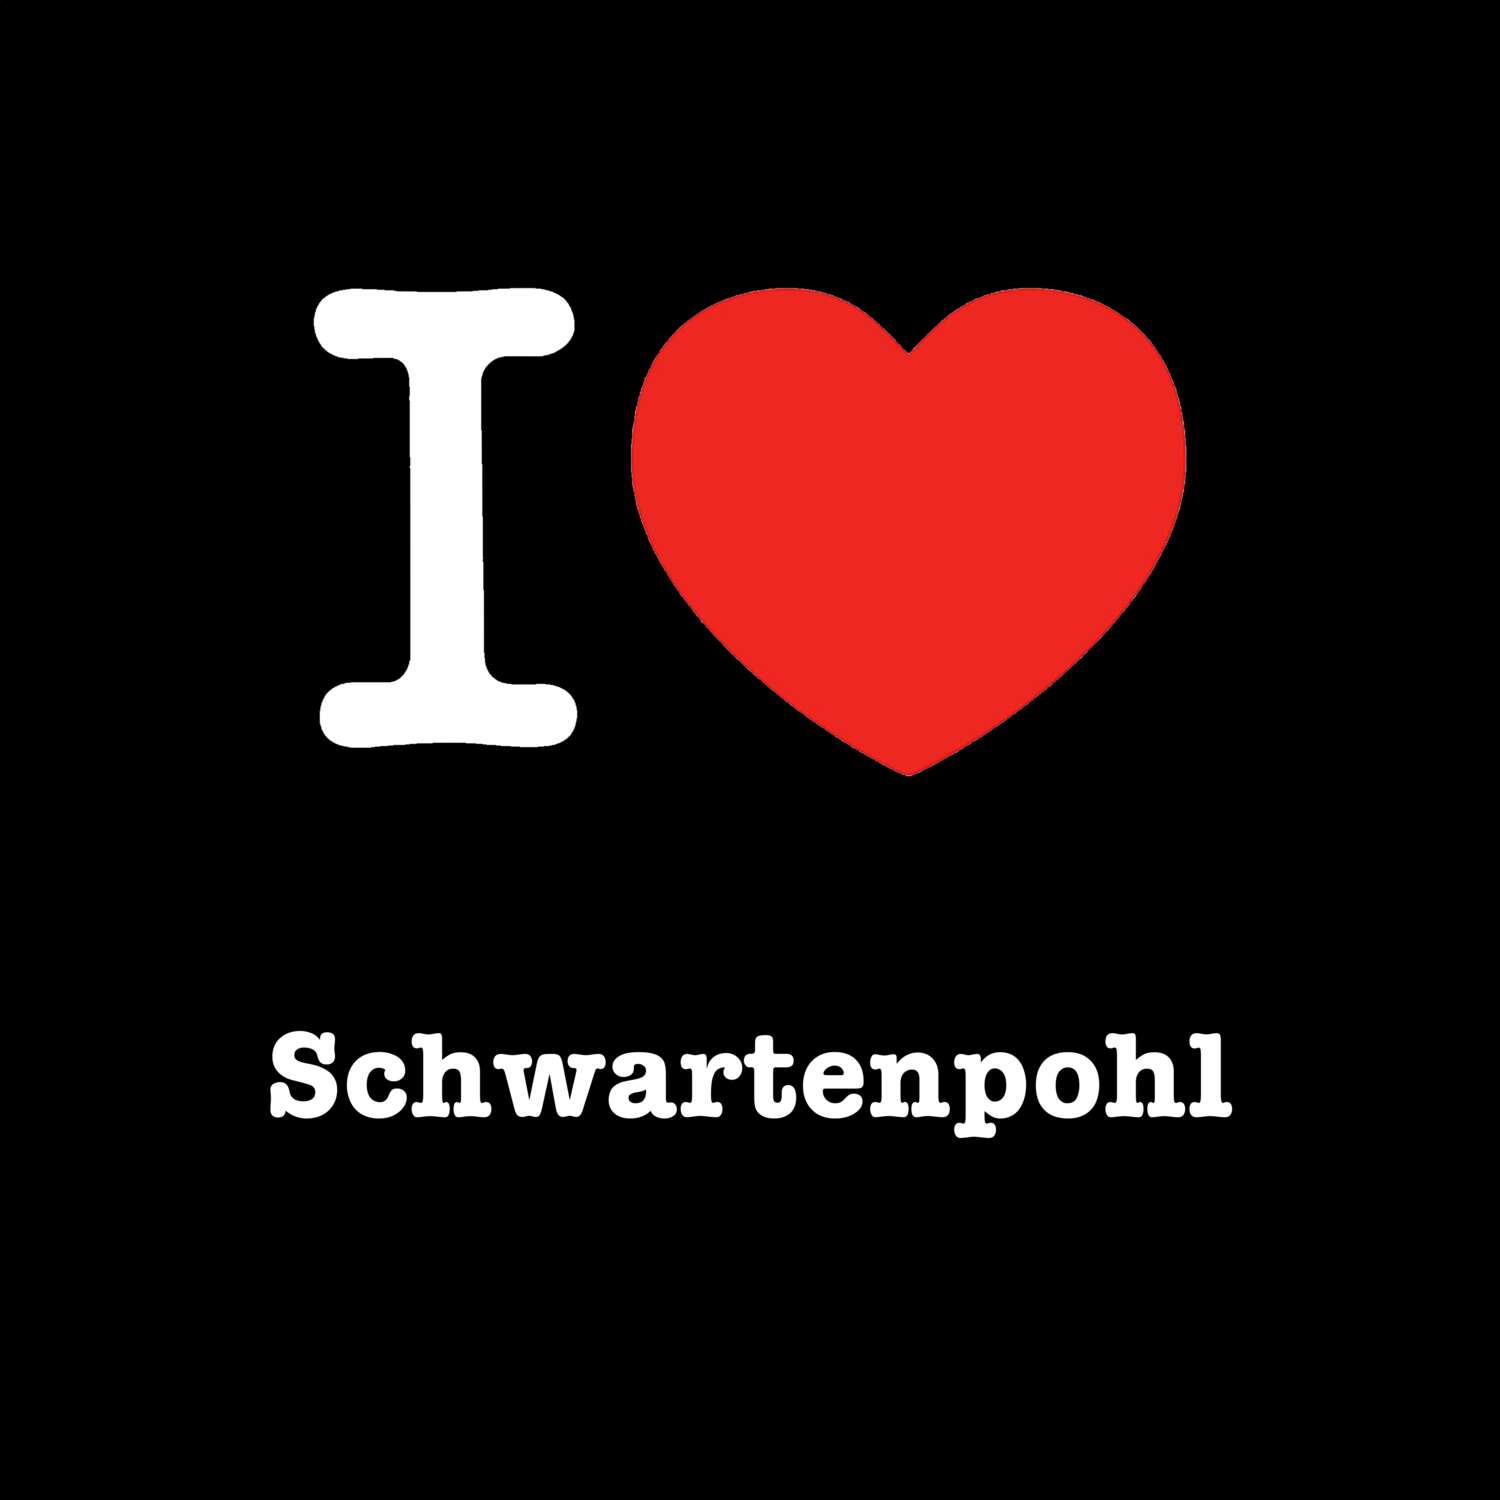 Schwartenpohl T-Shirt »I love«